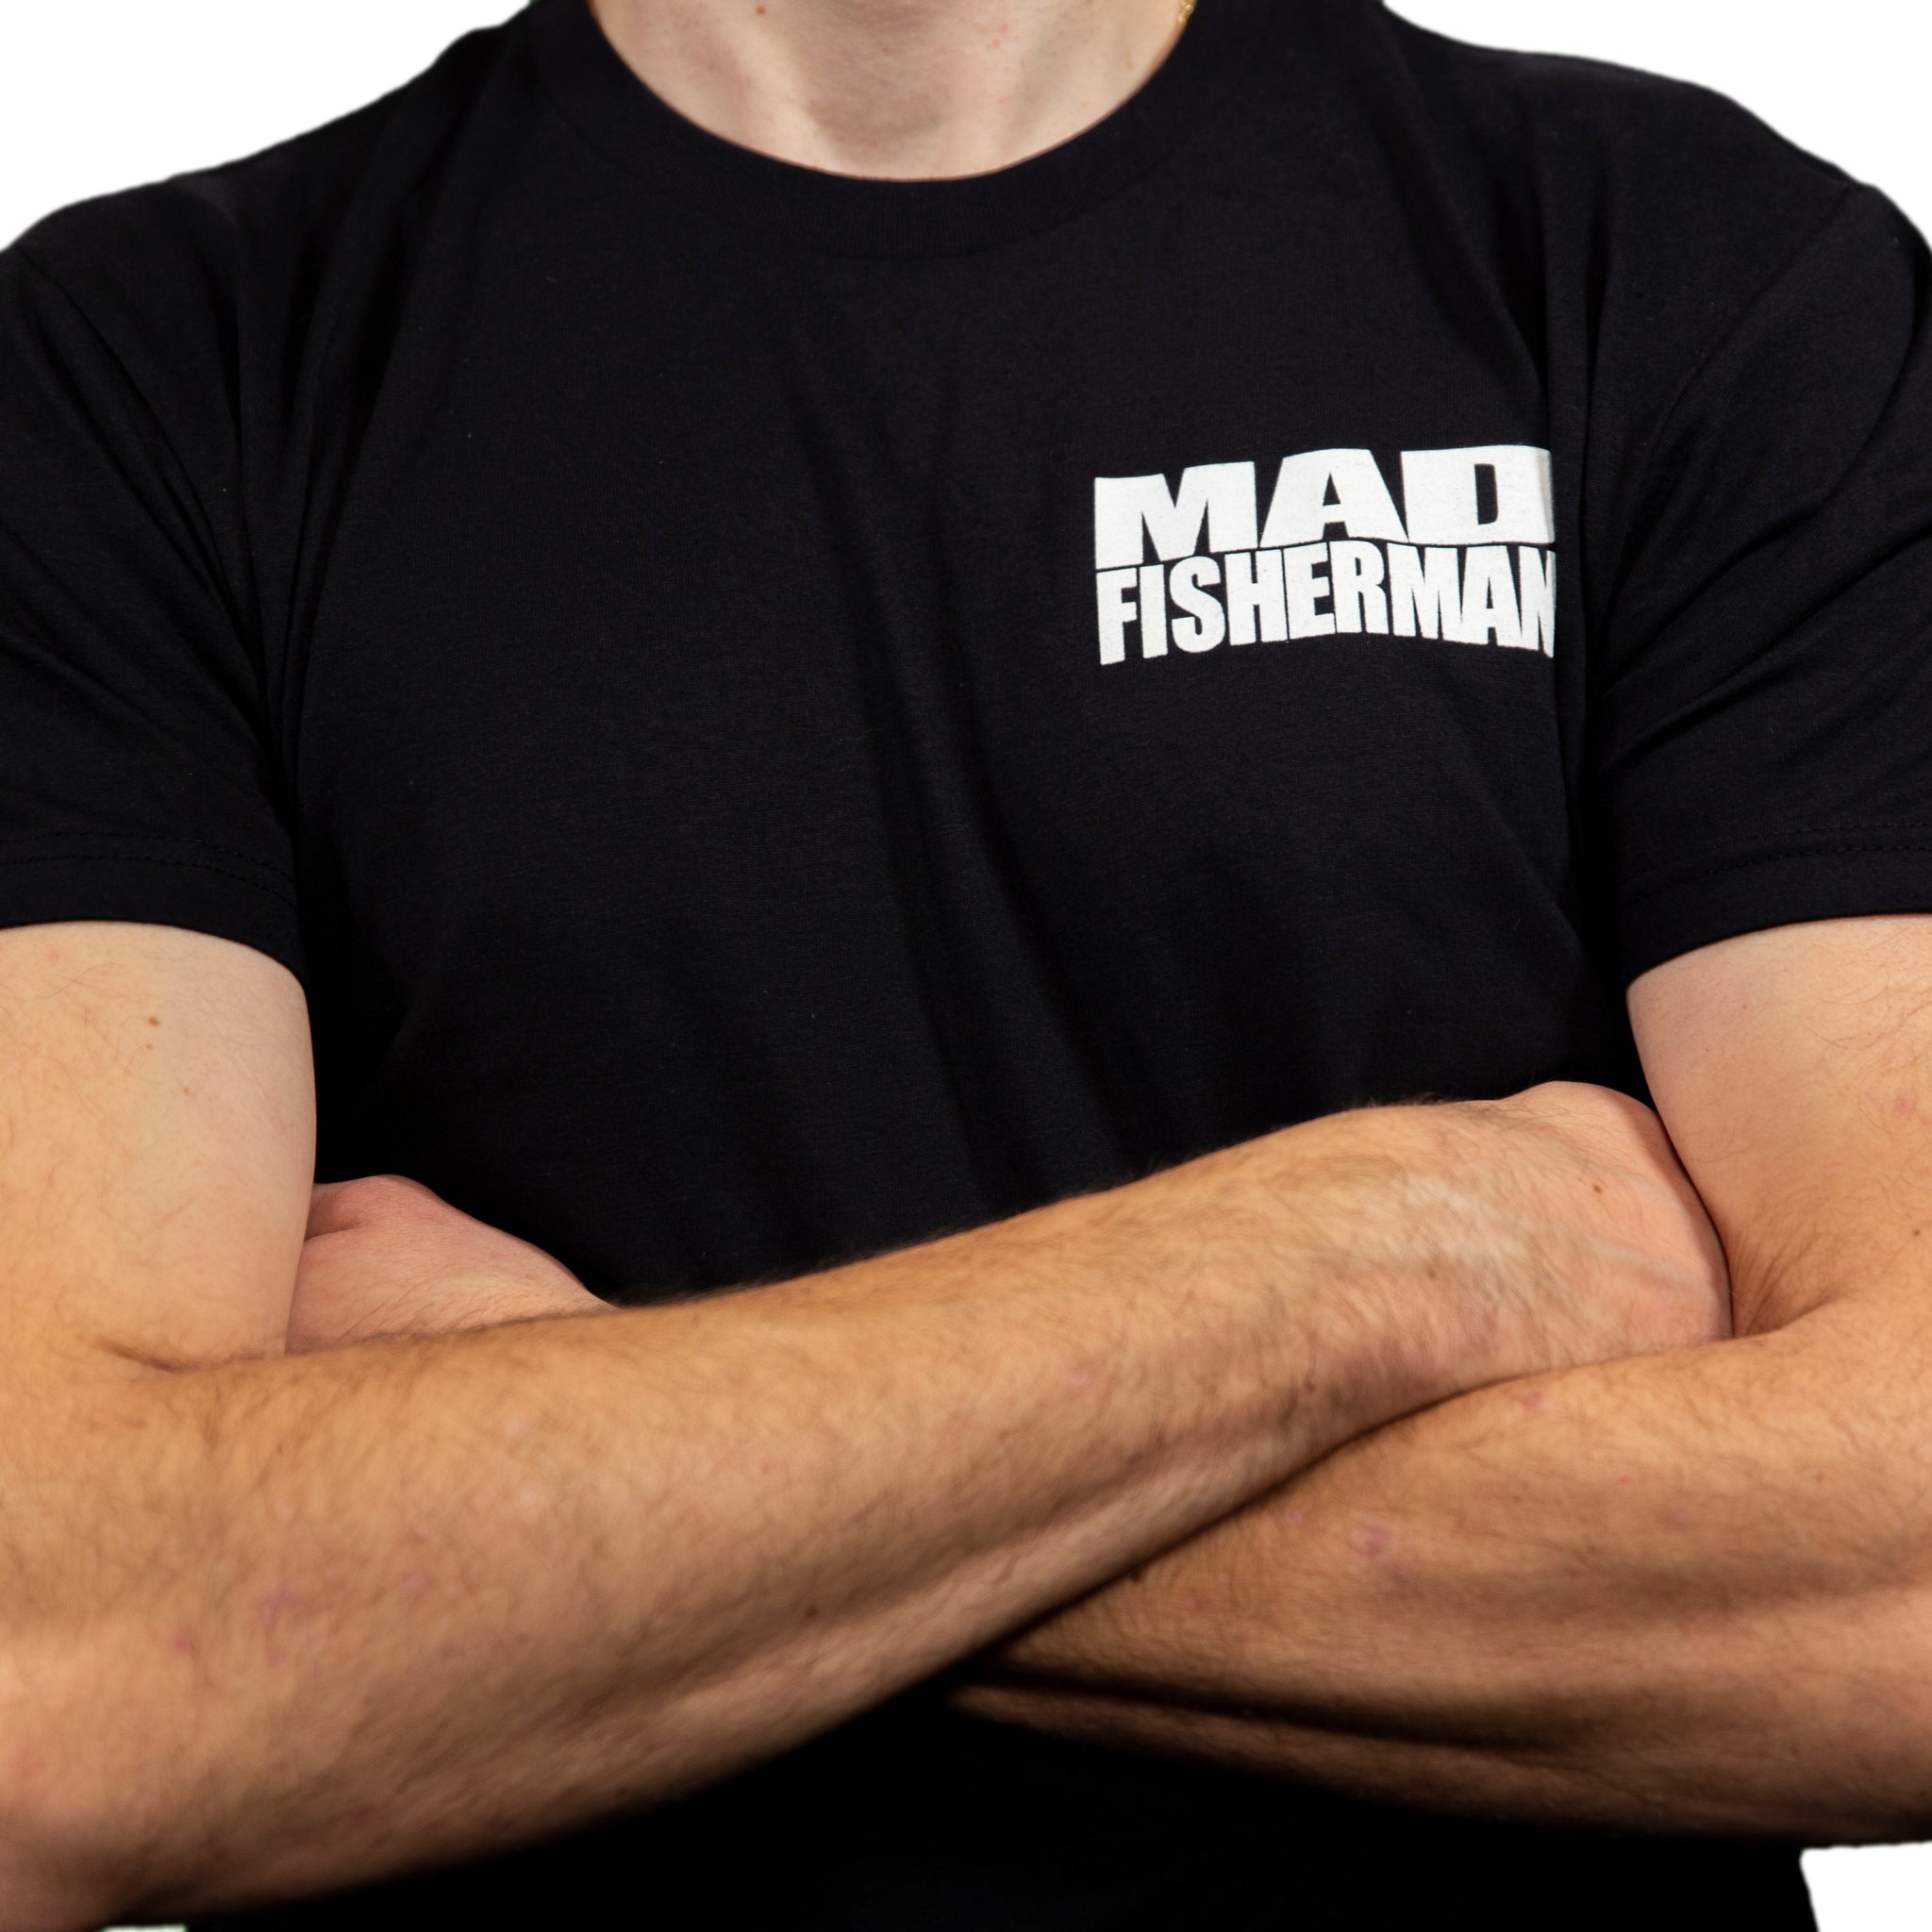 “MAD FISHERMAN” T-shirt